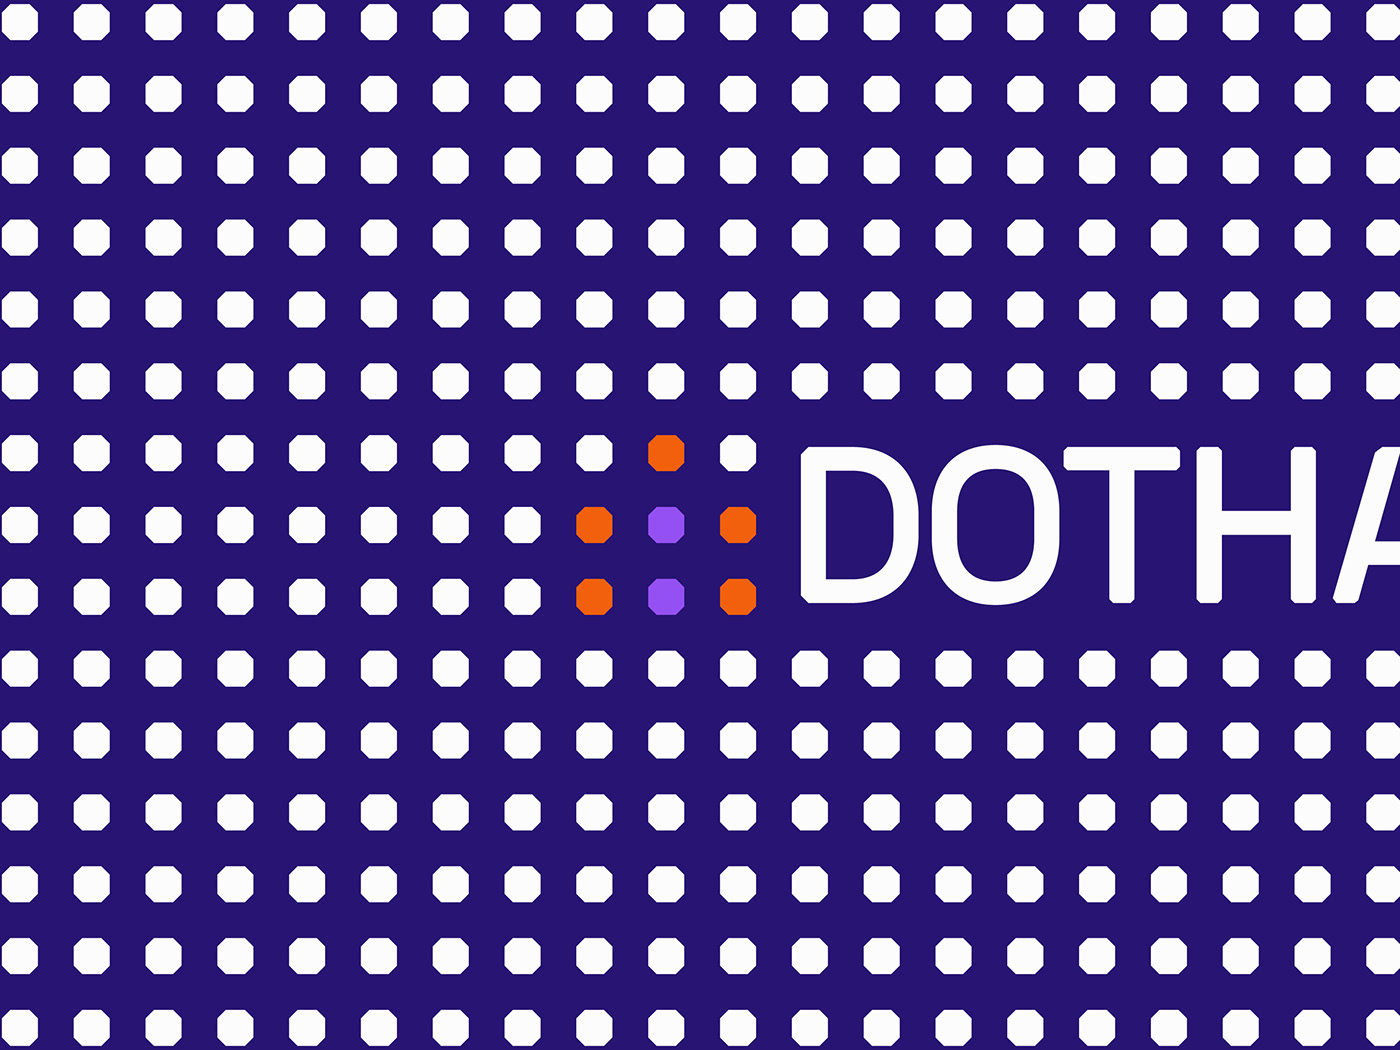 Pattern design of Dothabitum